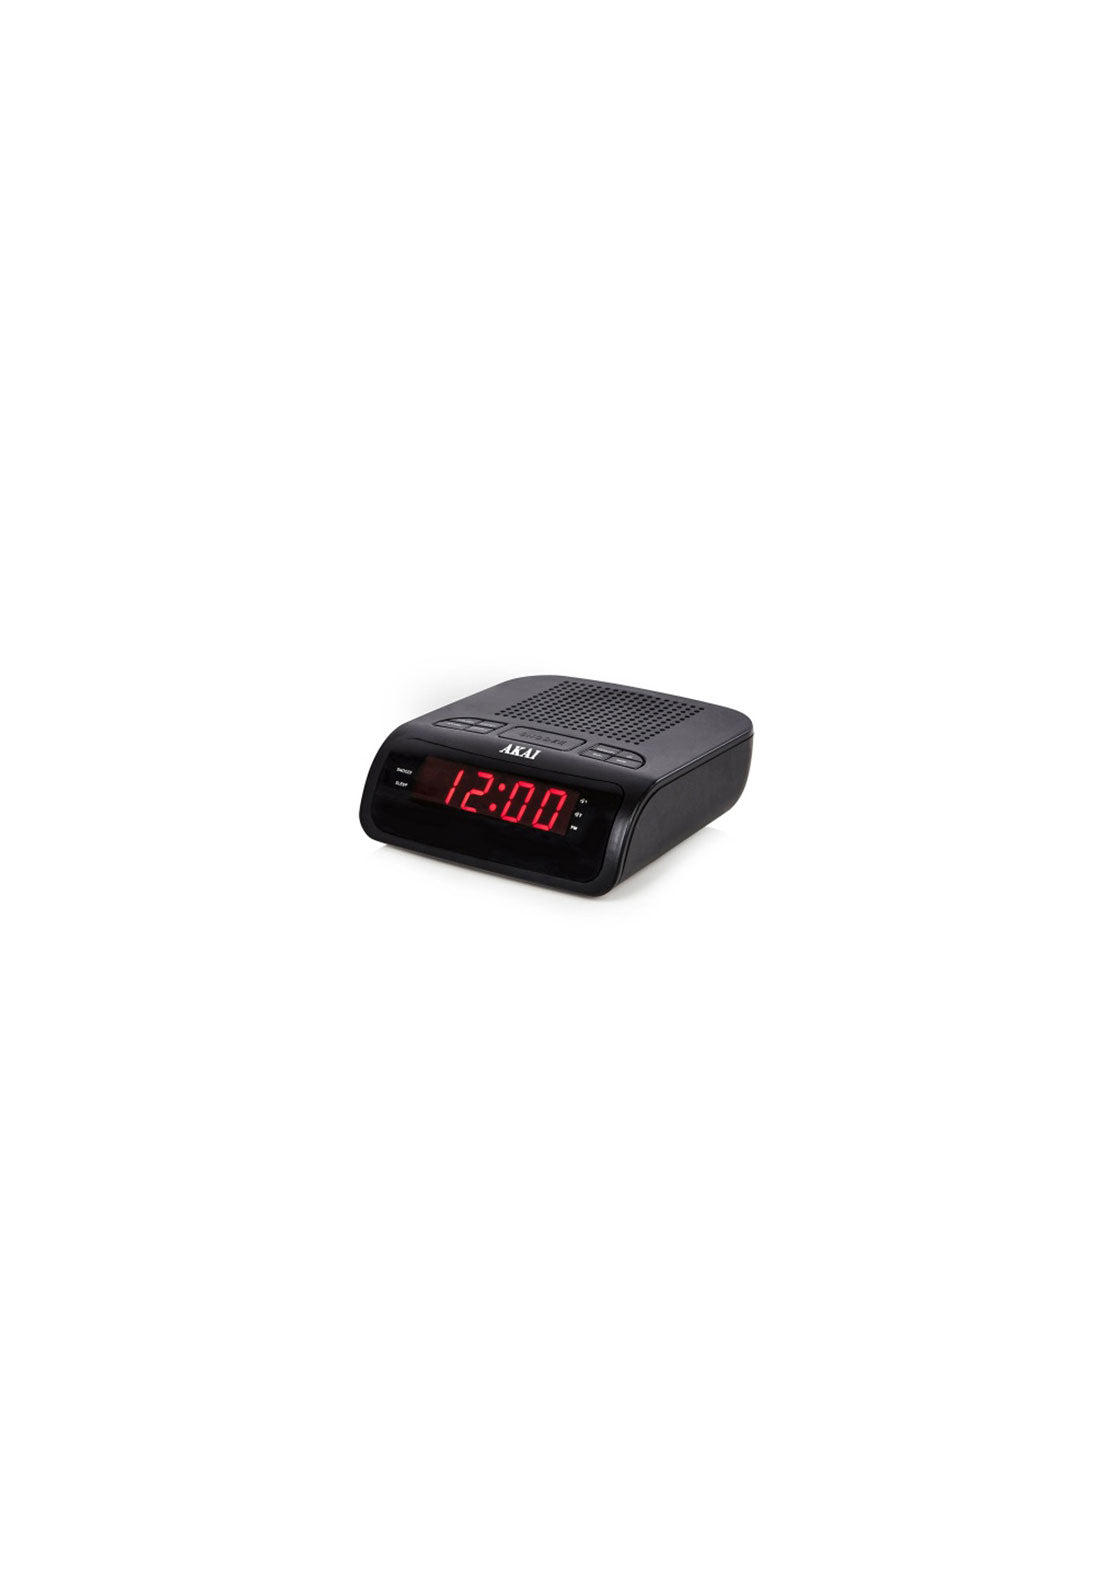 Akai Am/Fm Alarm Clock Radio With Led Display | A61020 - Black 2 Shaws Department Stores